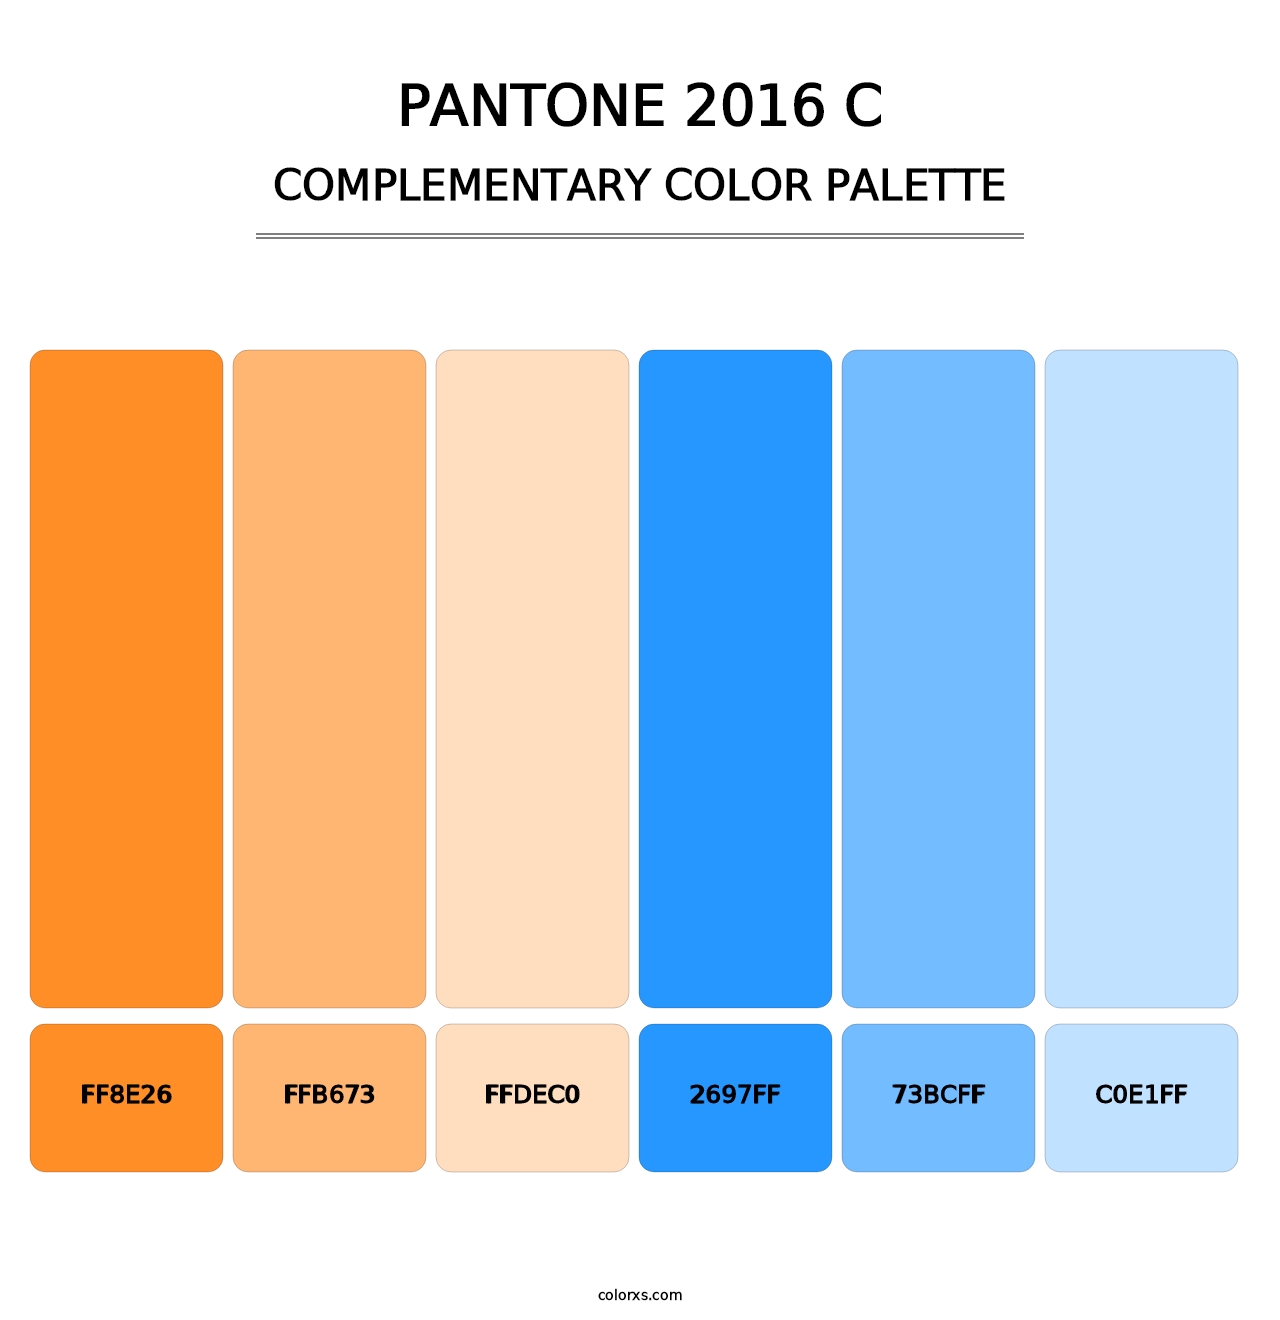 PANTONE 2016 C - Complementary Color Palette